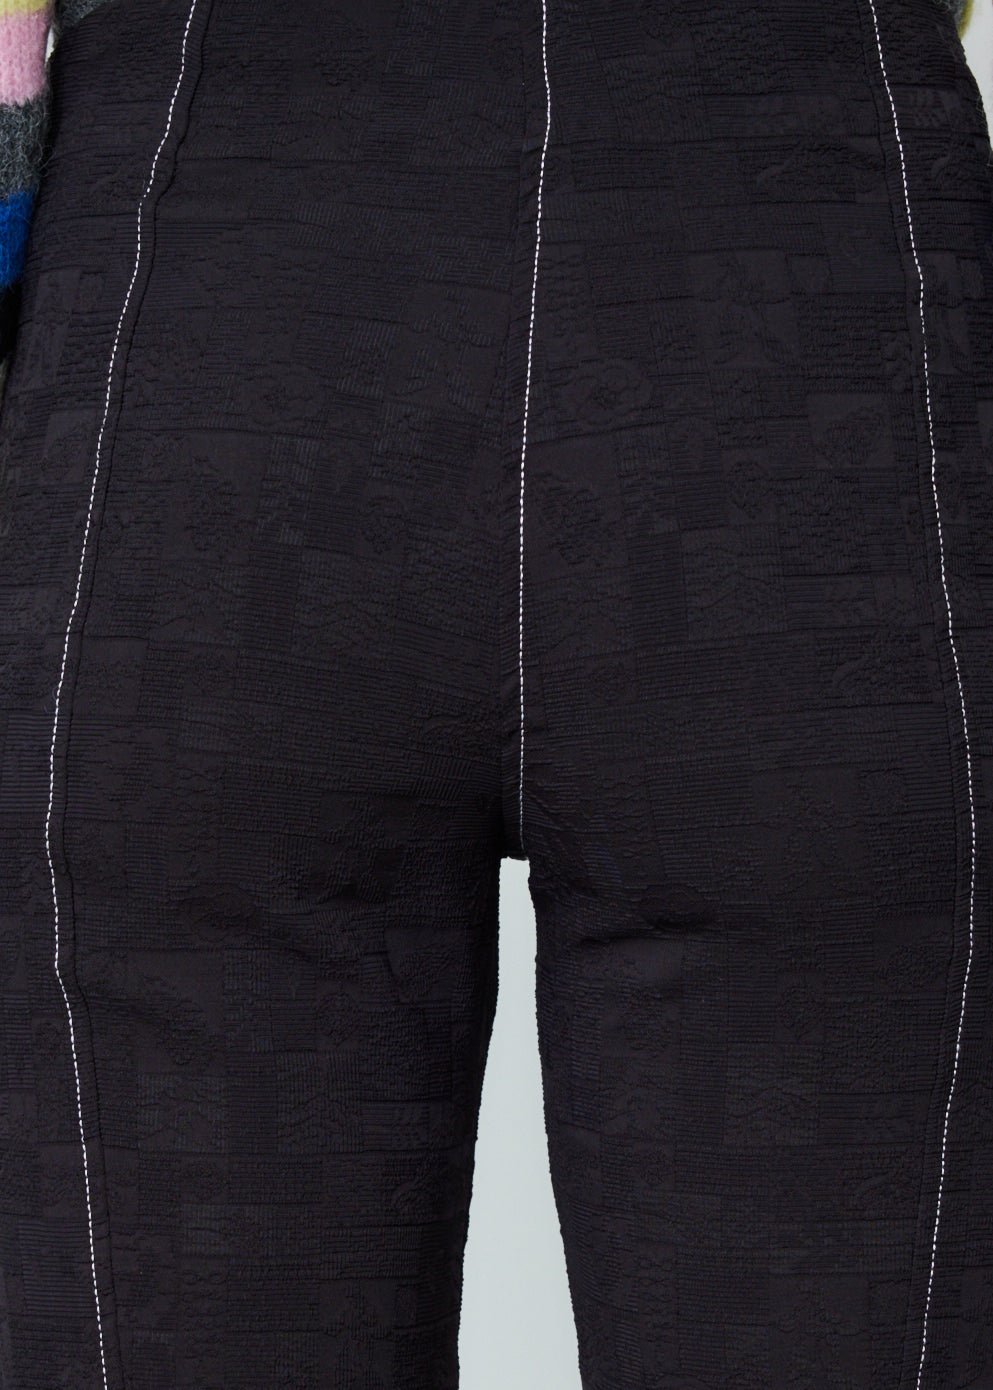 Jacquard low-rise flared pants in black - Ganni